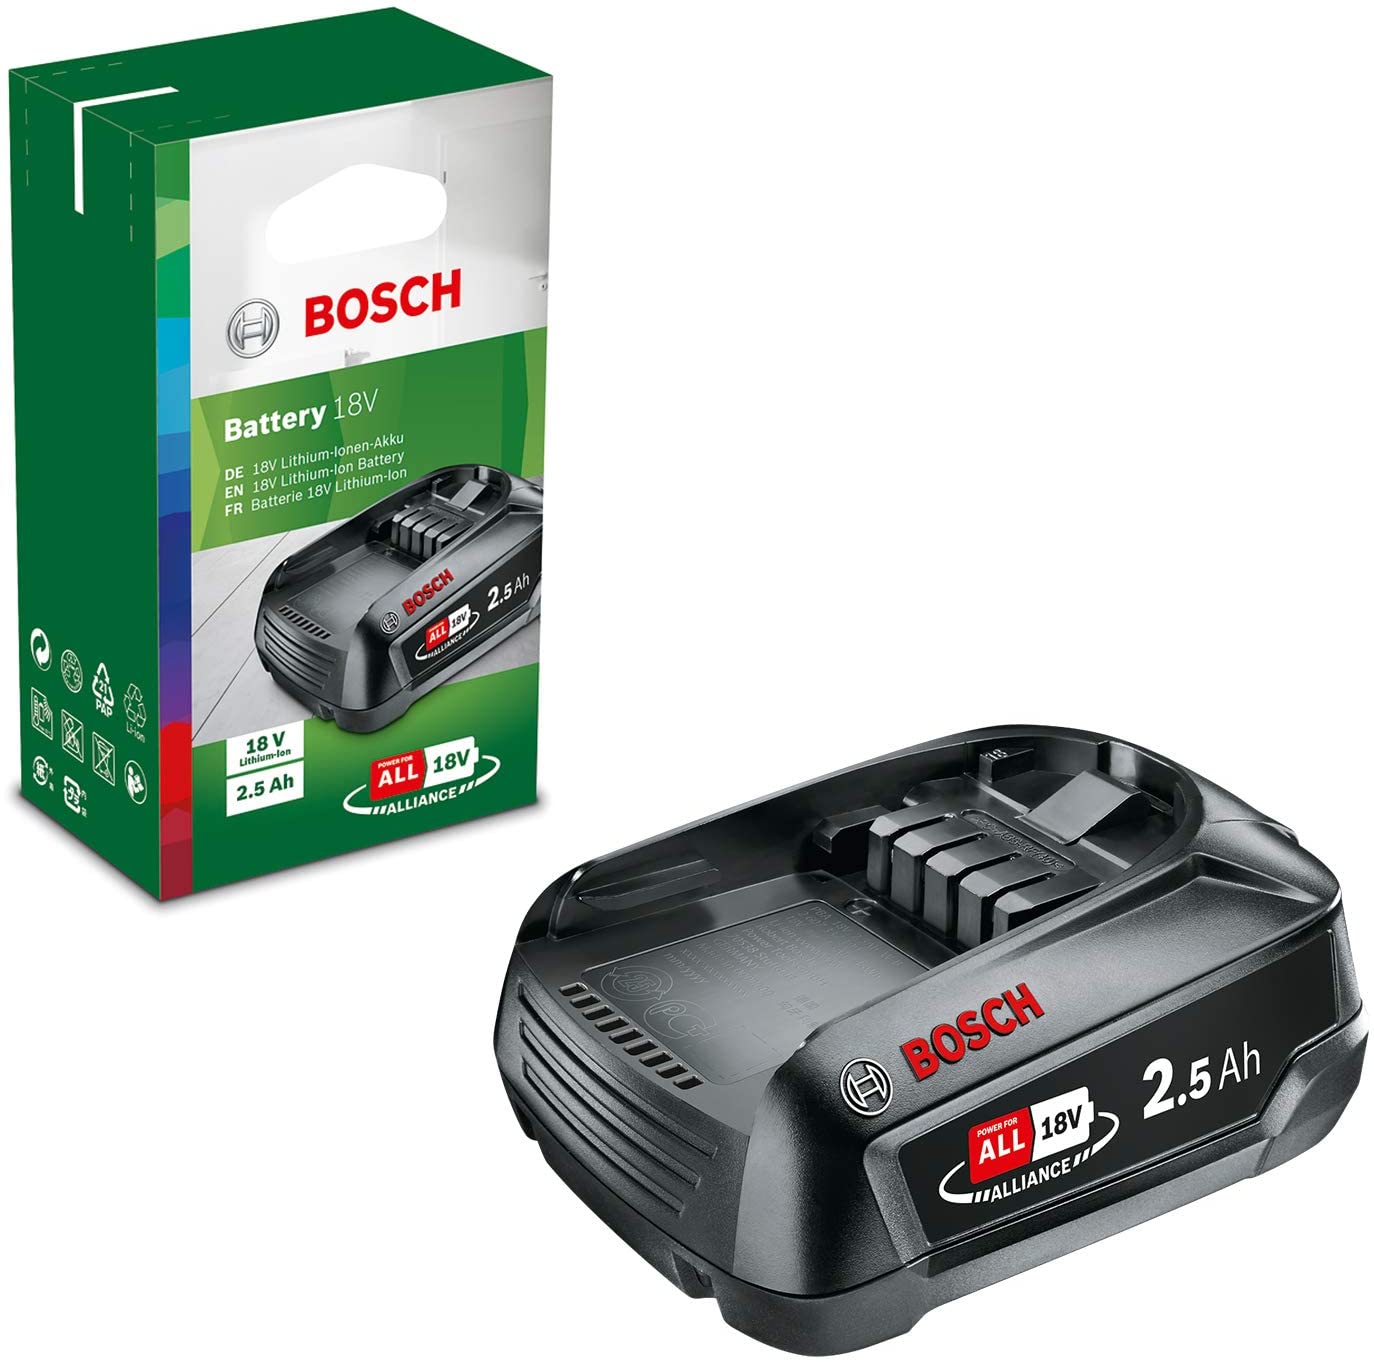 BOSCH Battery pack PBA 18V 2.5Ah W-B-1 600 A00 5B0